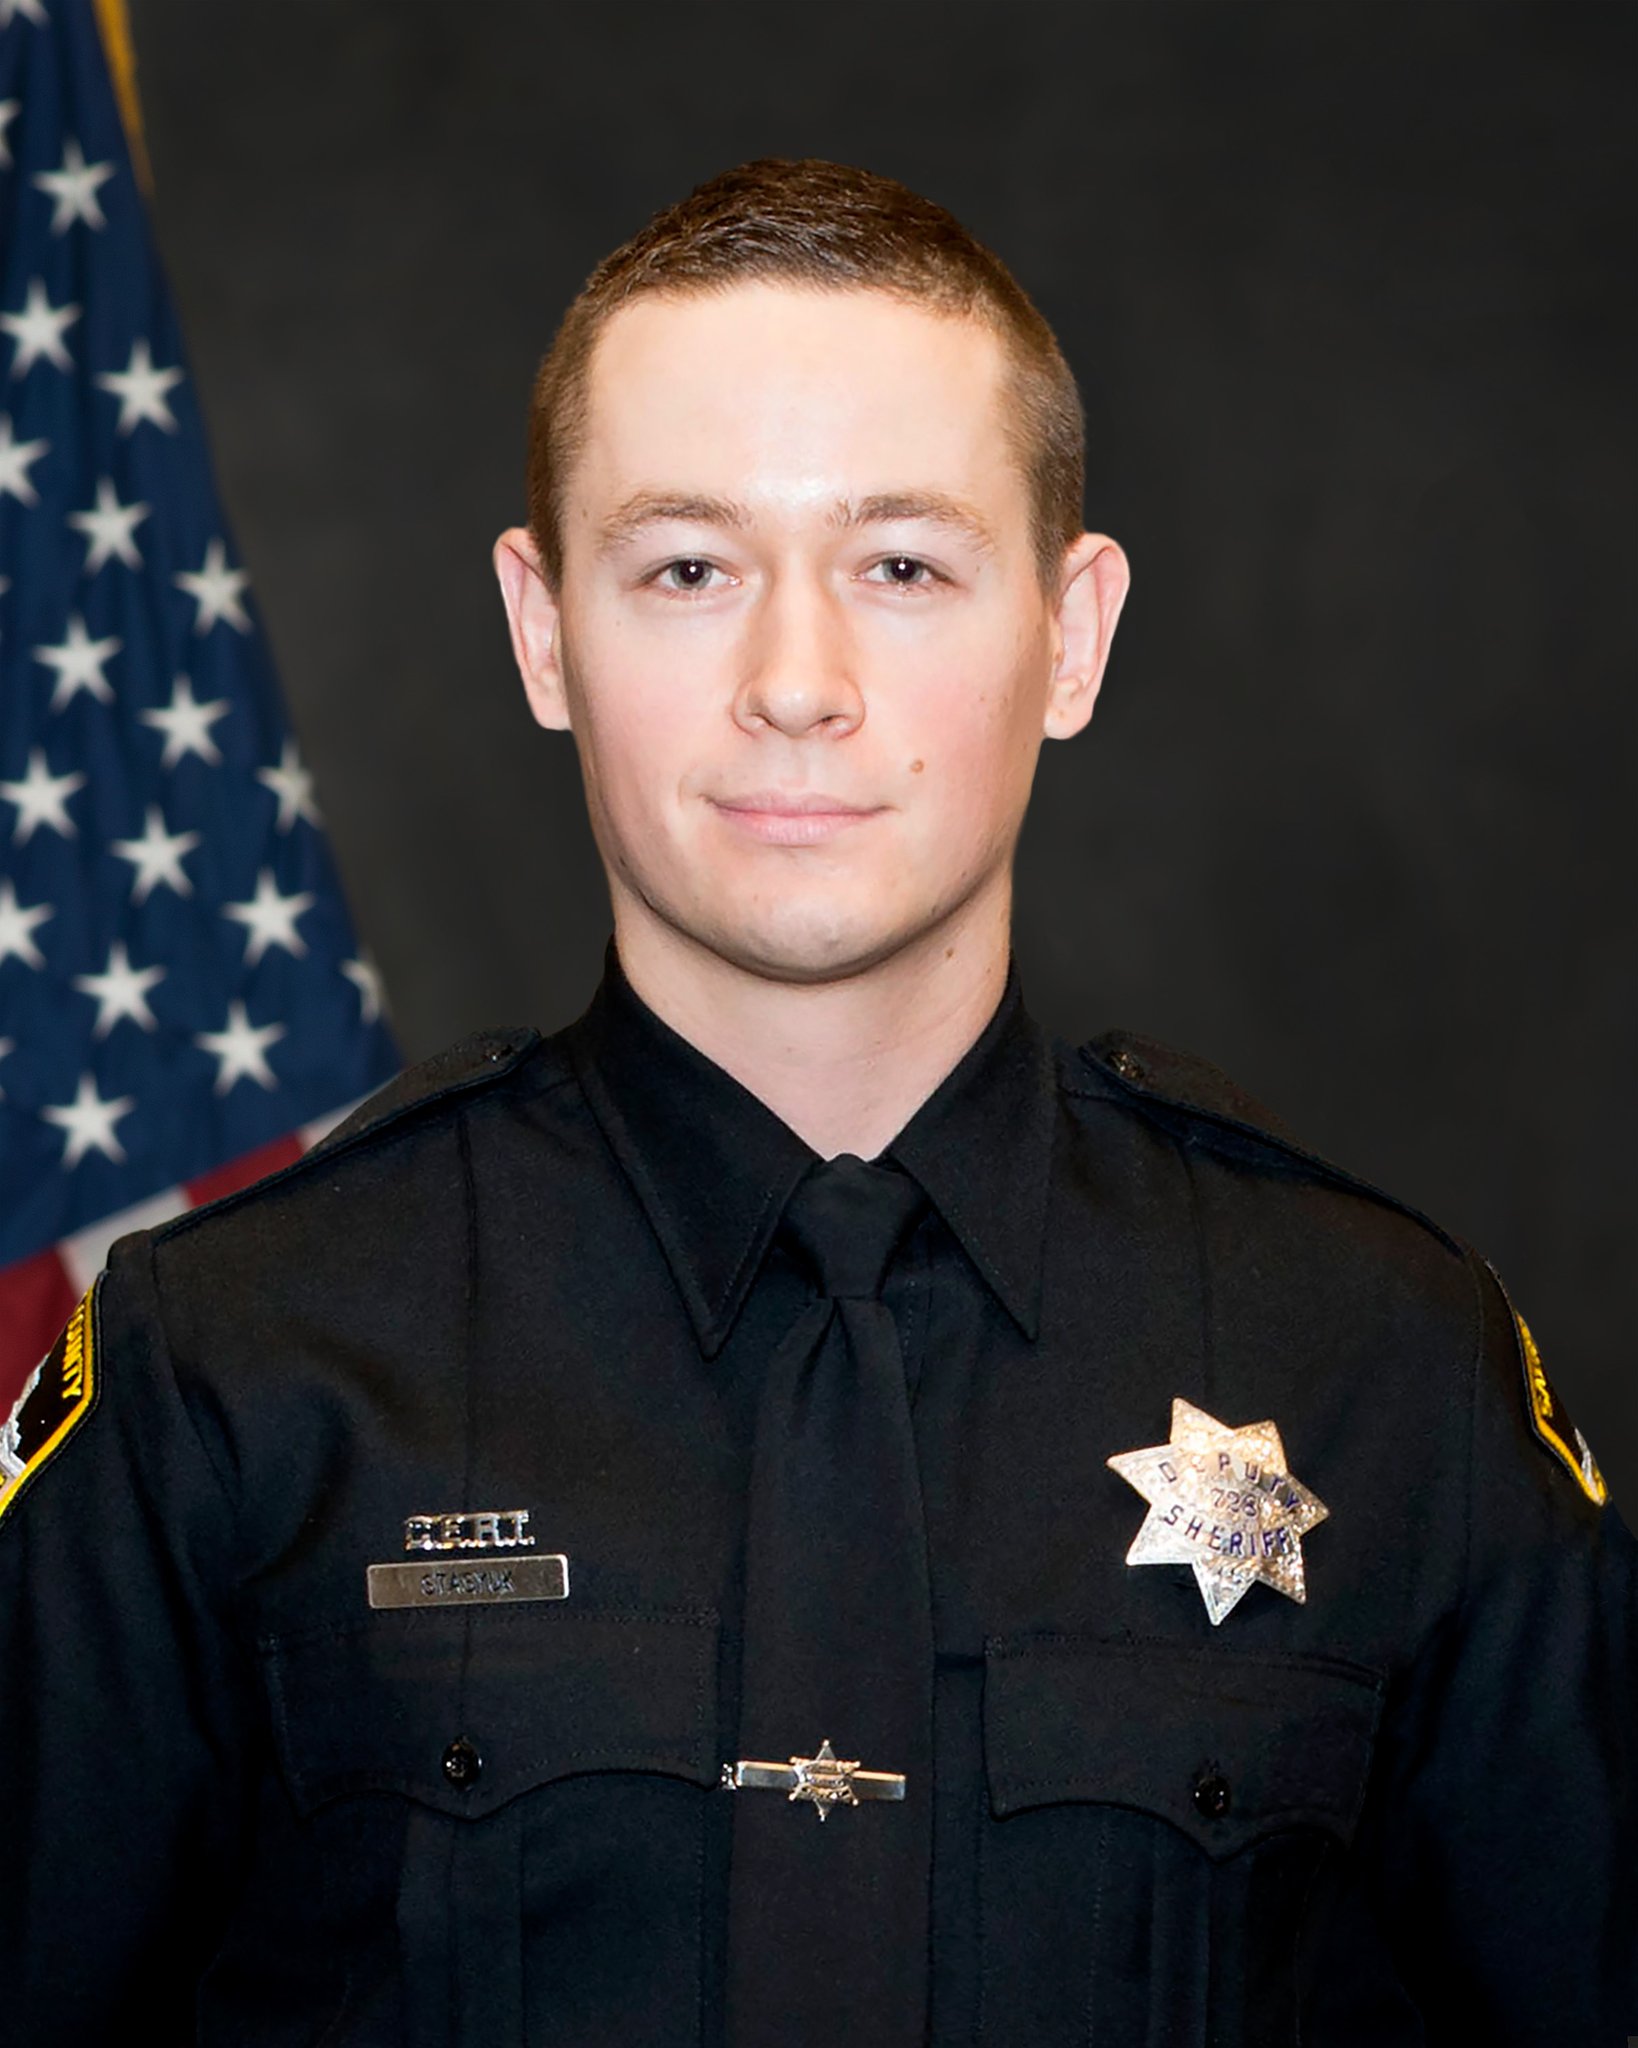 Deputy Sheriff Mark V. Stasyuk | Sacramento County Sheriff's Department, California